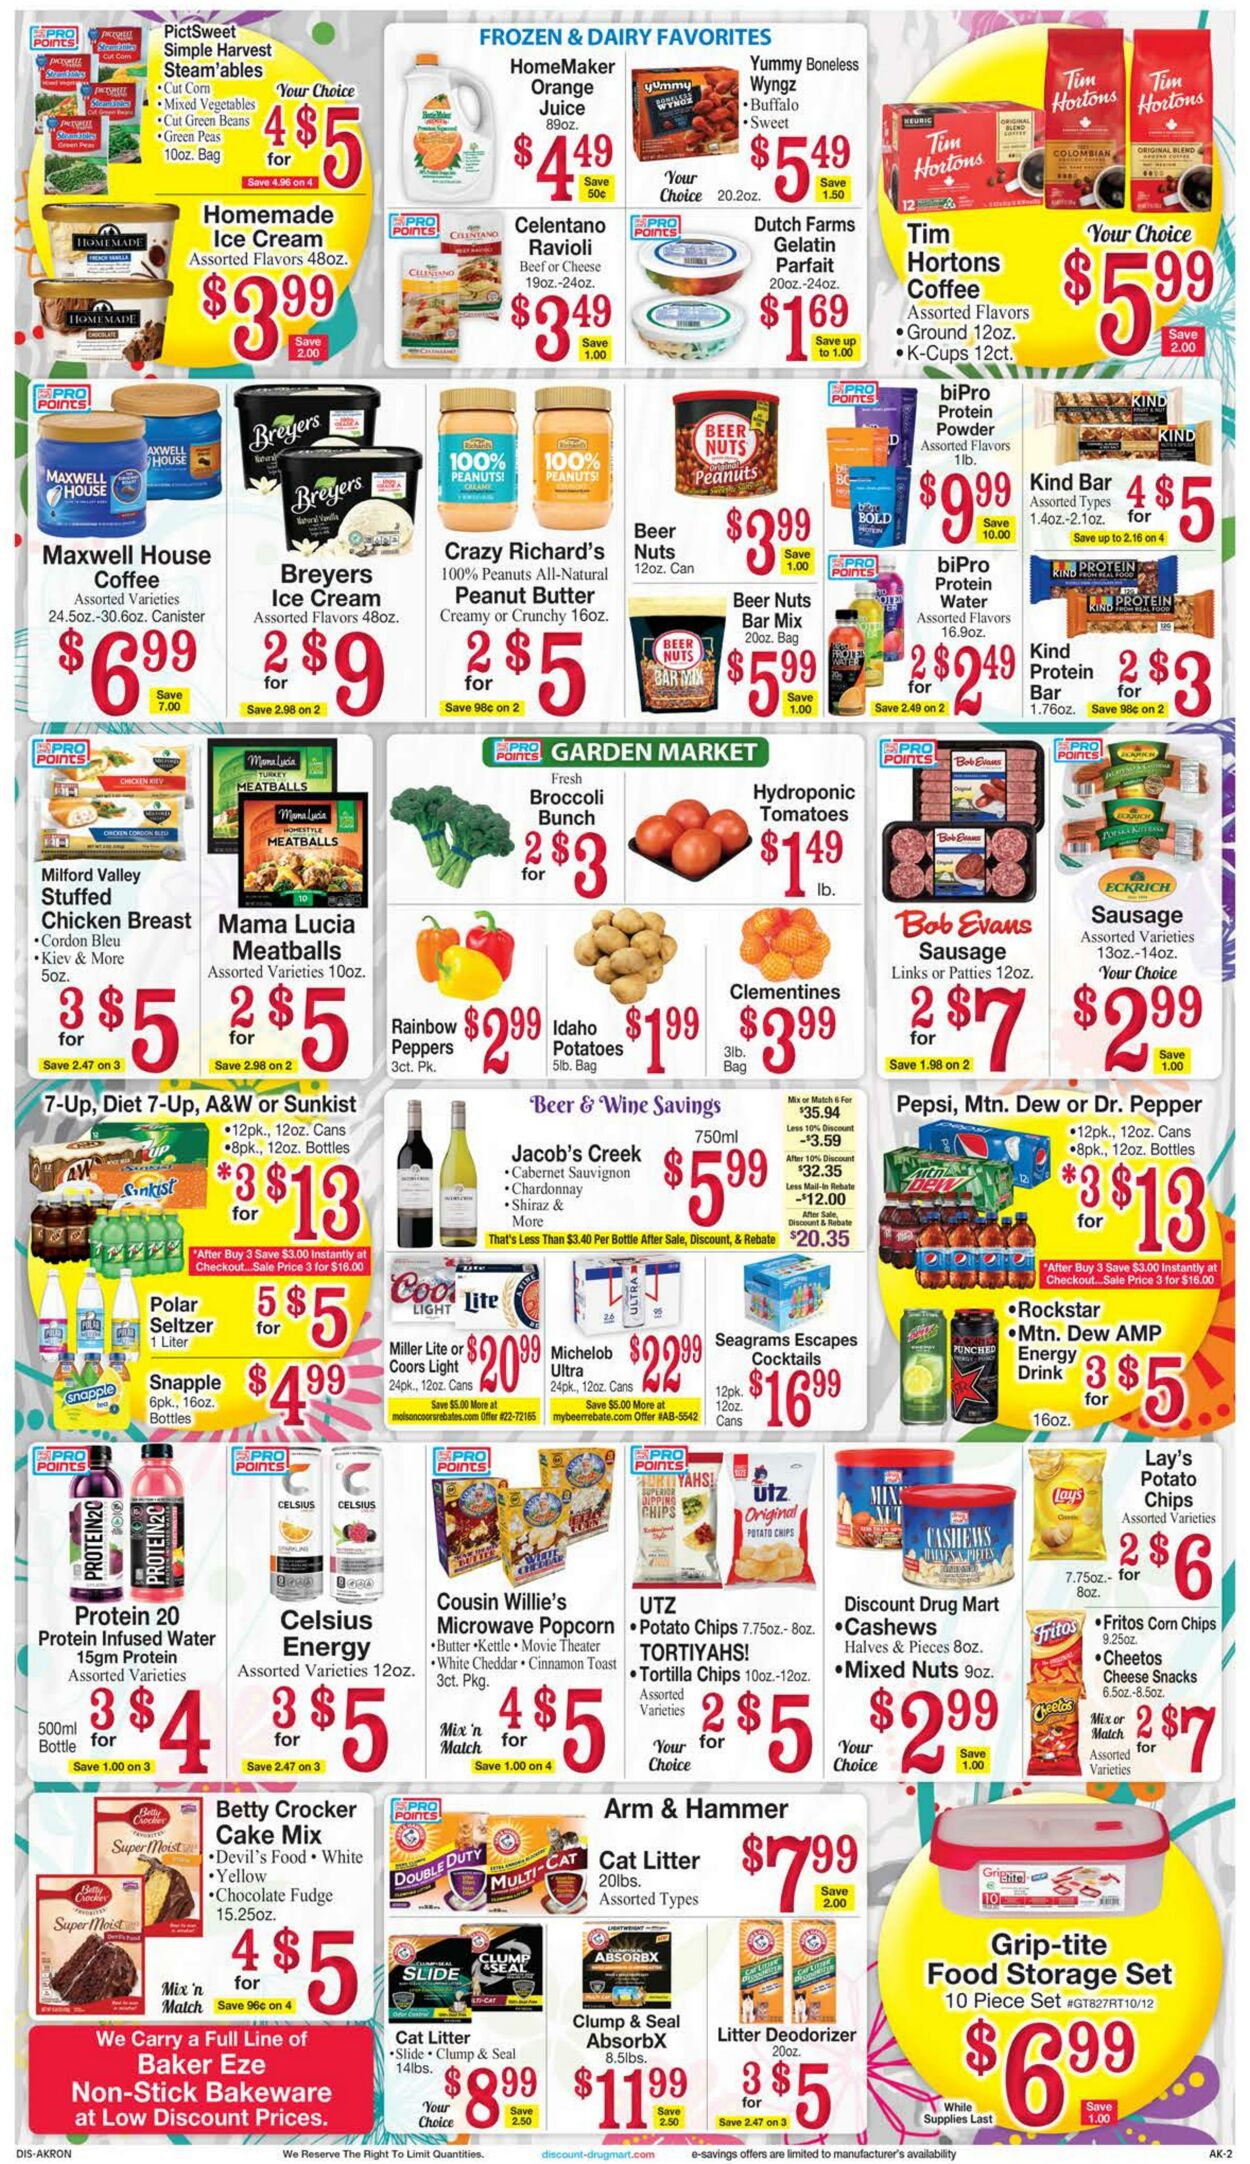 Weekly ad Discount Drug Mart 05/11/2022 - 05/17/2022